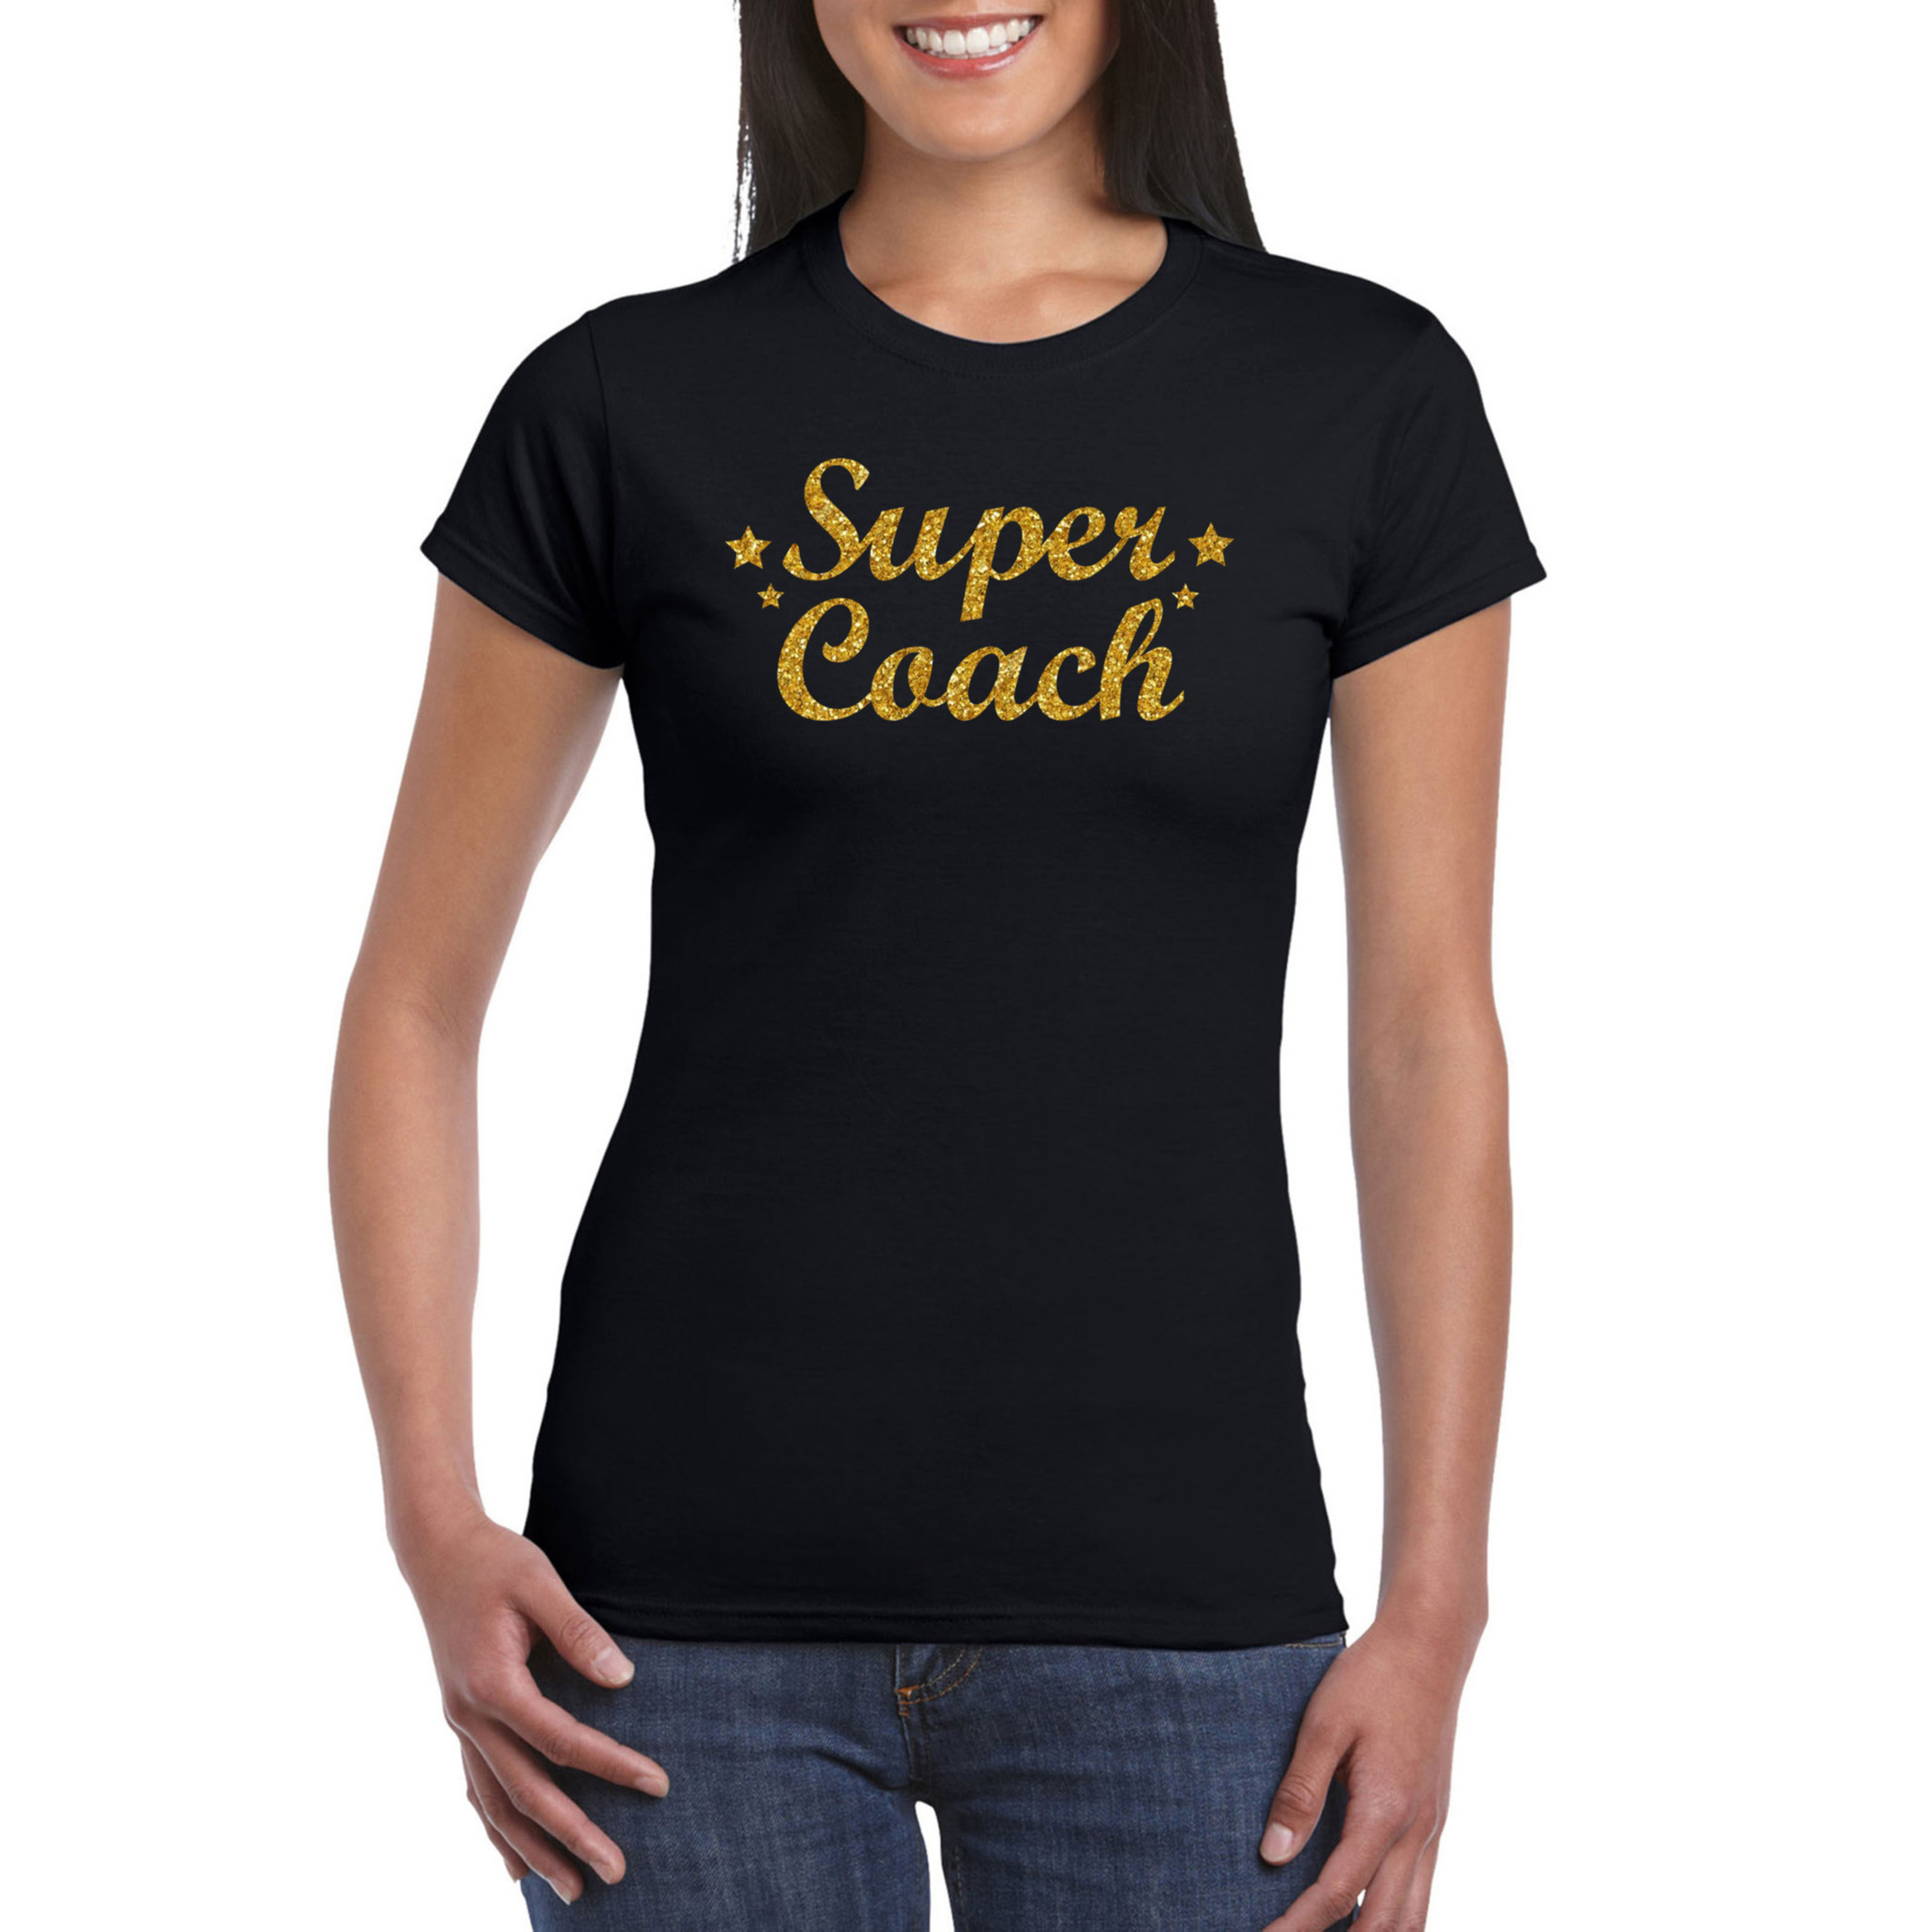 Super Coach cadeau t-shirt met gouden glitters op zwart voor dames